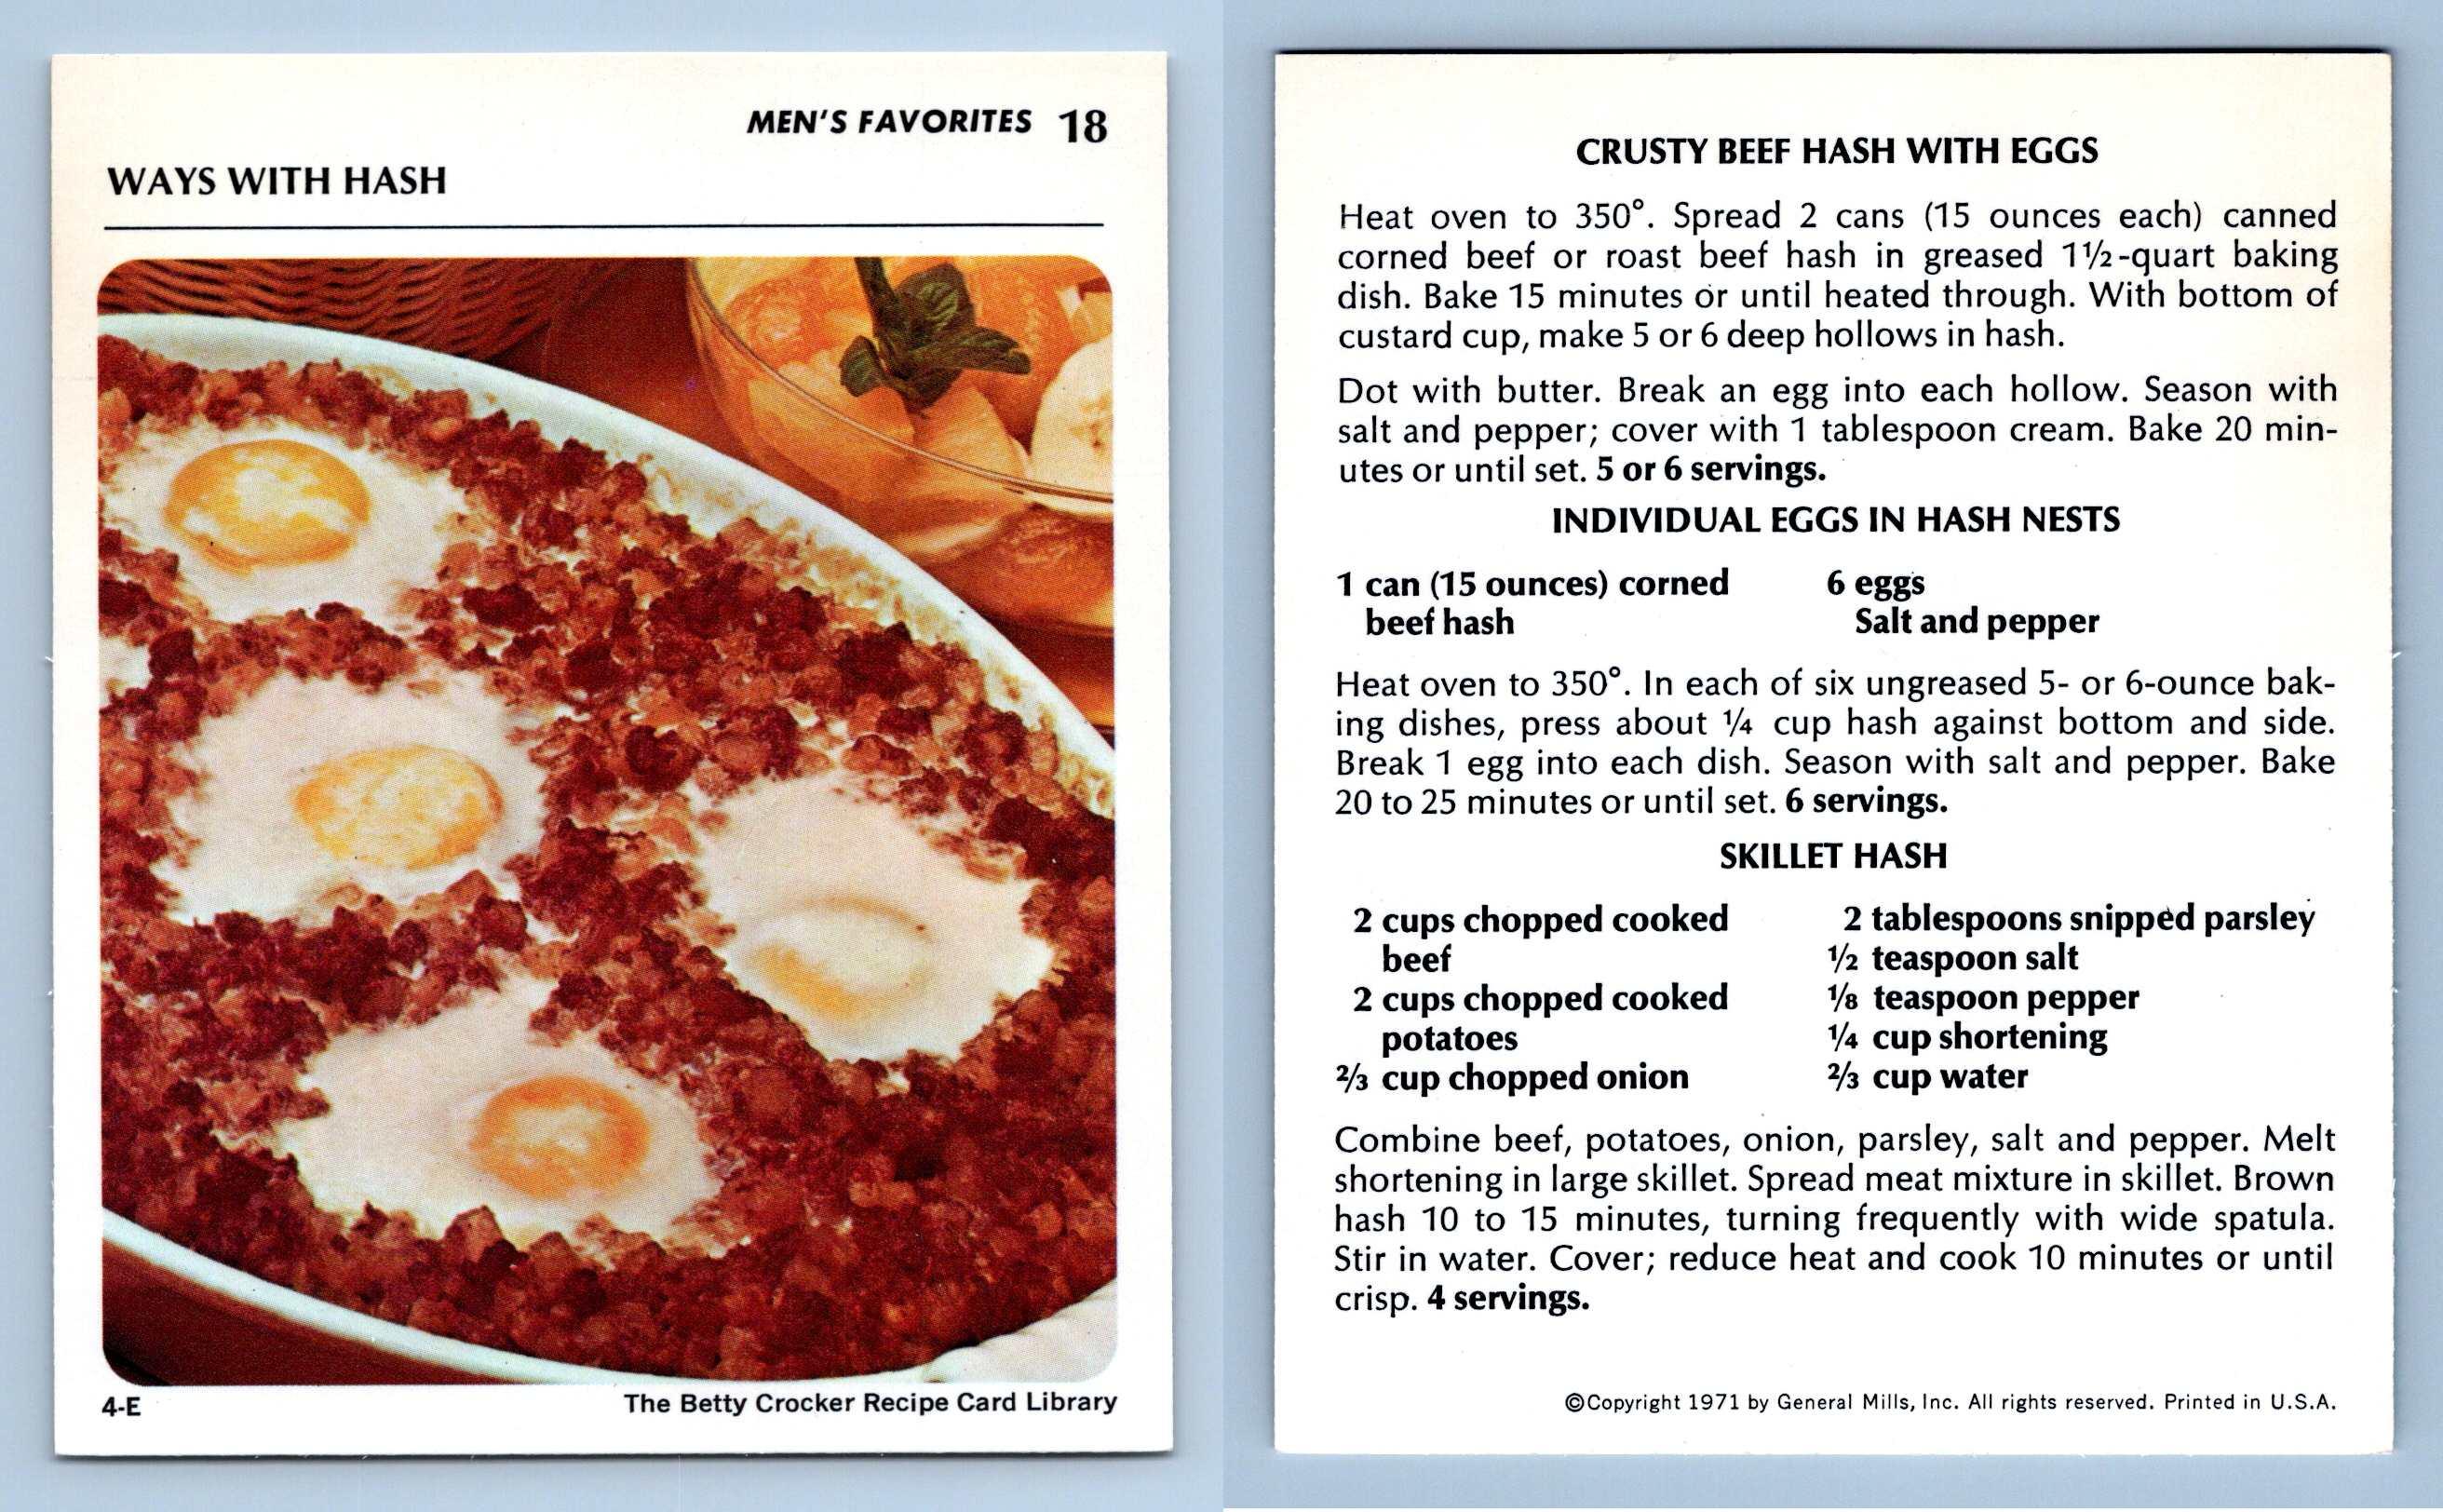 Beef Fudge,1967 – A Vintage Recipe Test - Mid-Century Menu